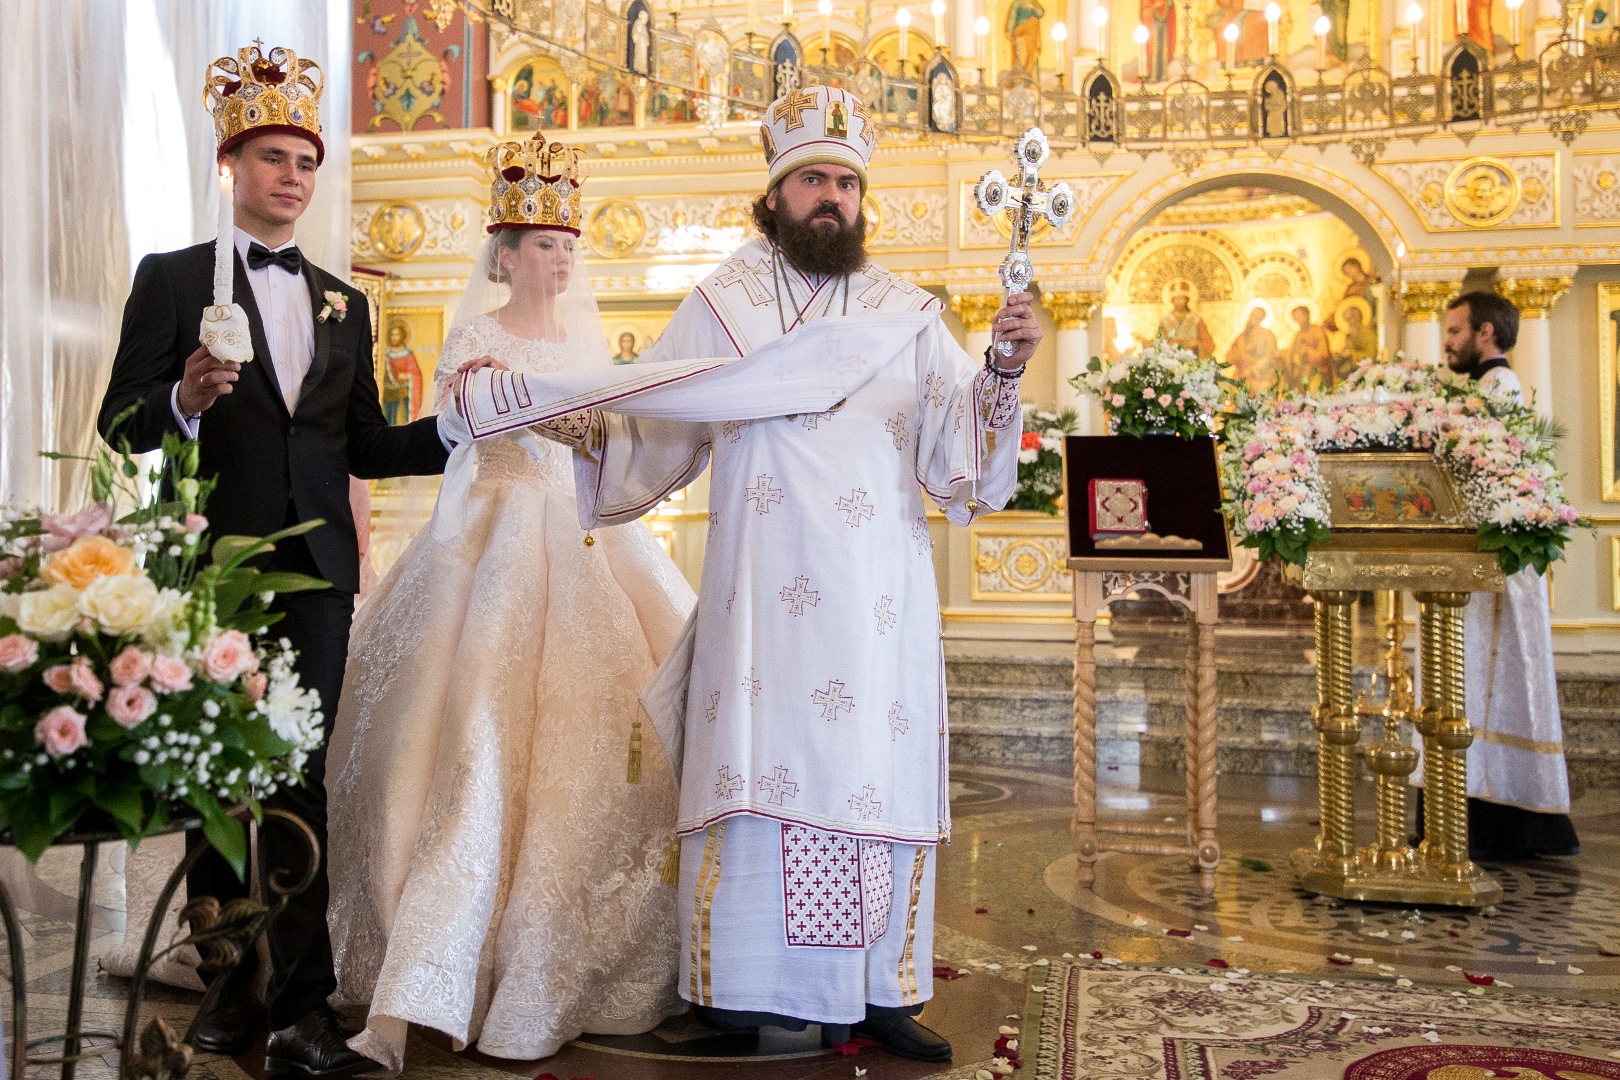 Венчание православие. Православная семья венчание. Таинство венчания в православной церкви. Венчание фотосессия. Церемония венчания.